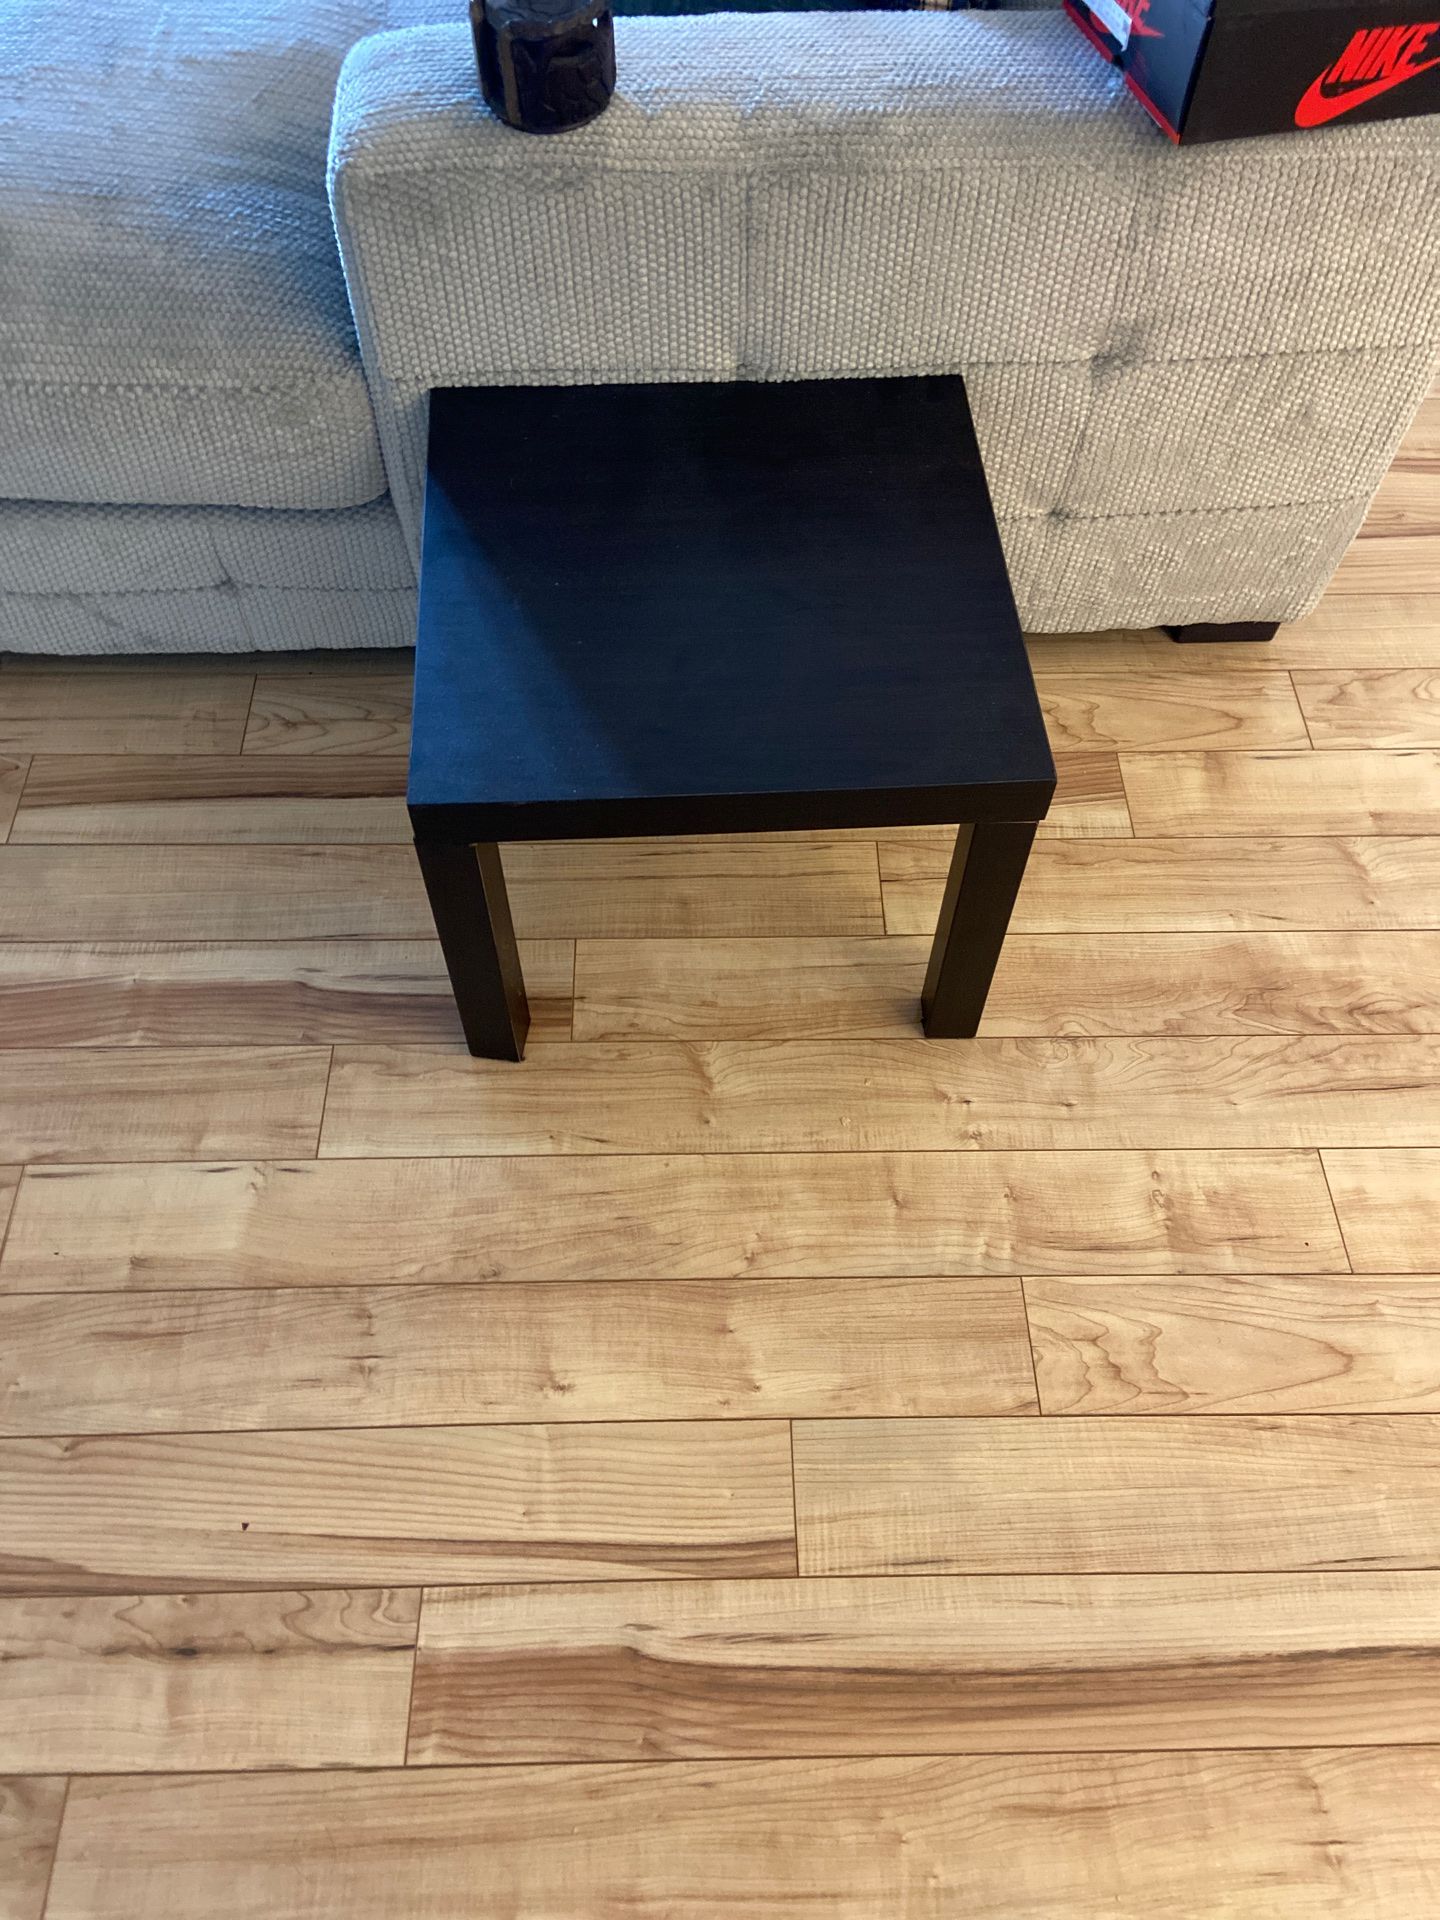 IKEA end table